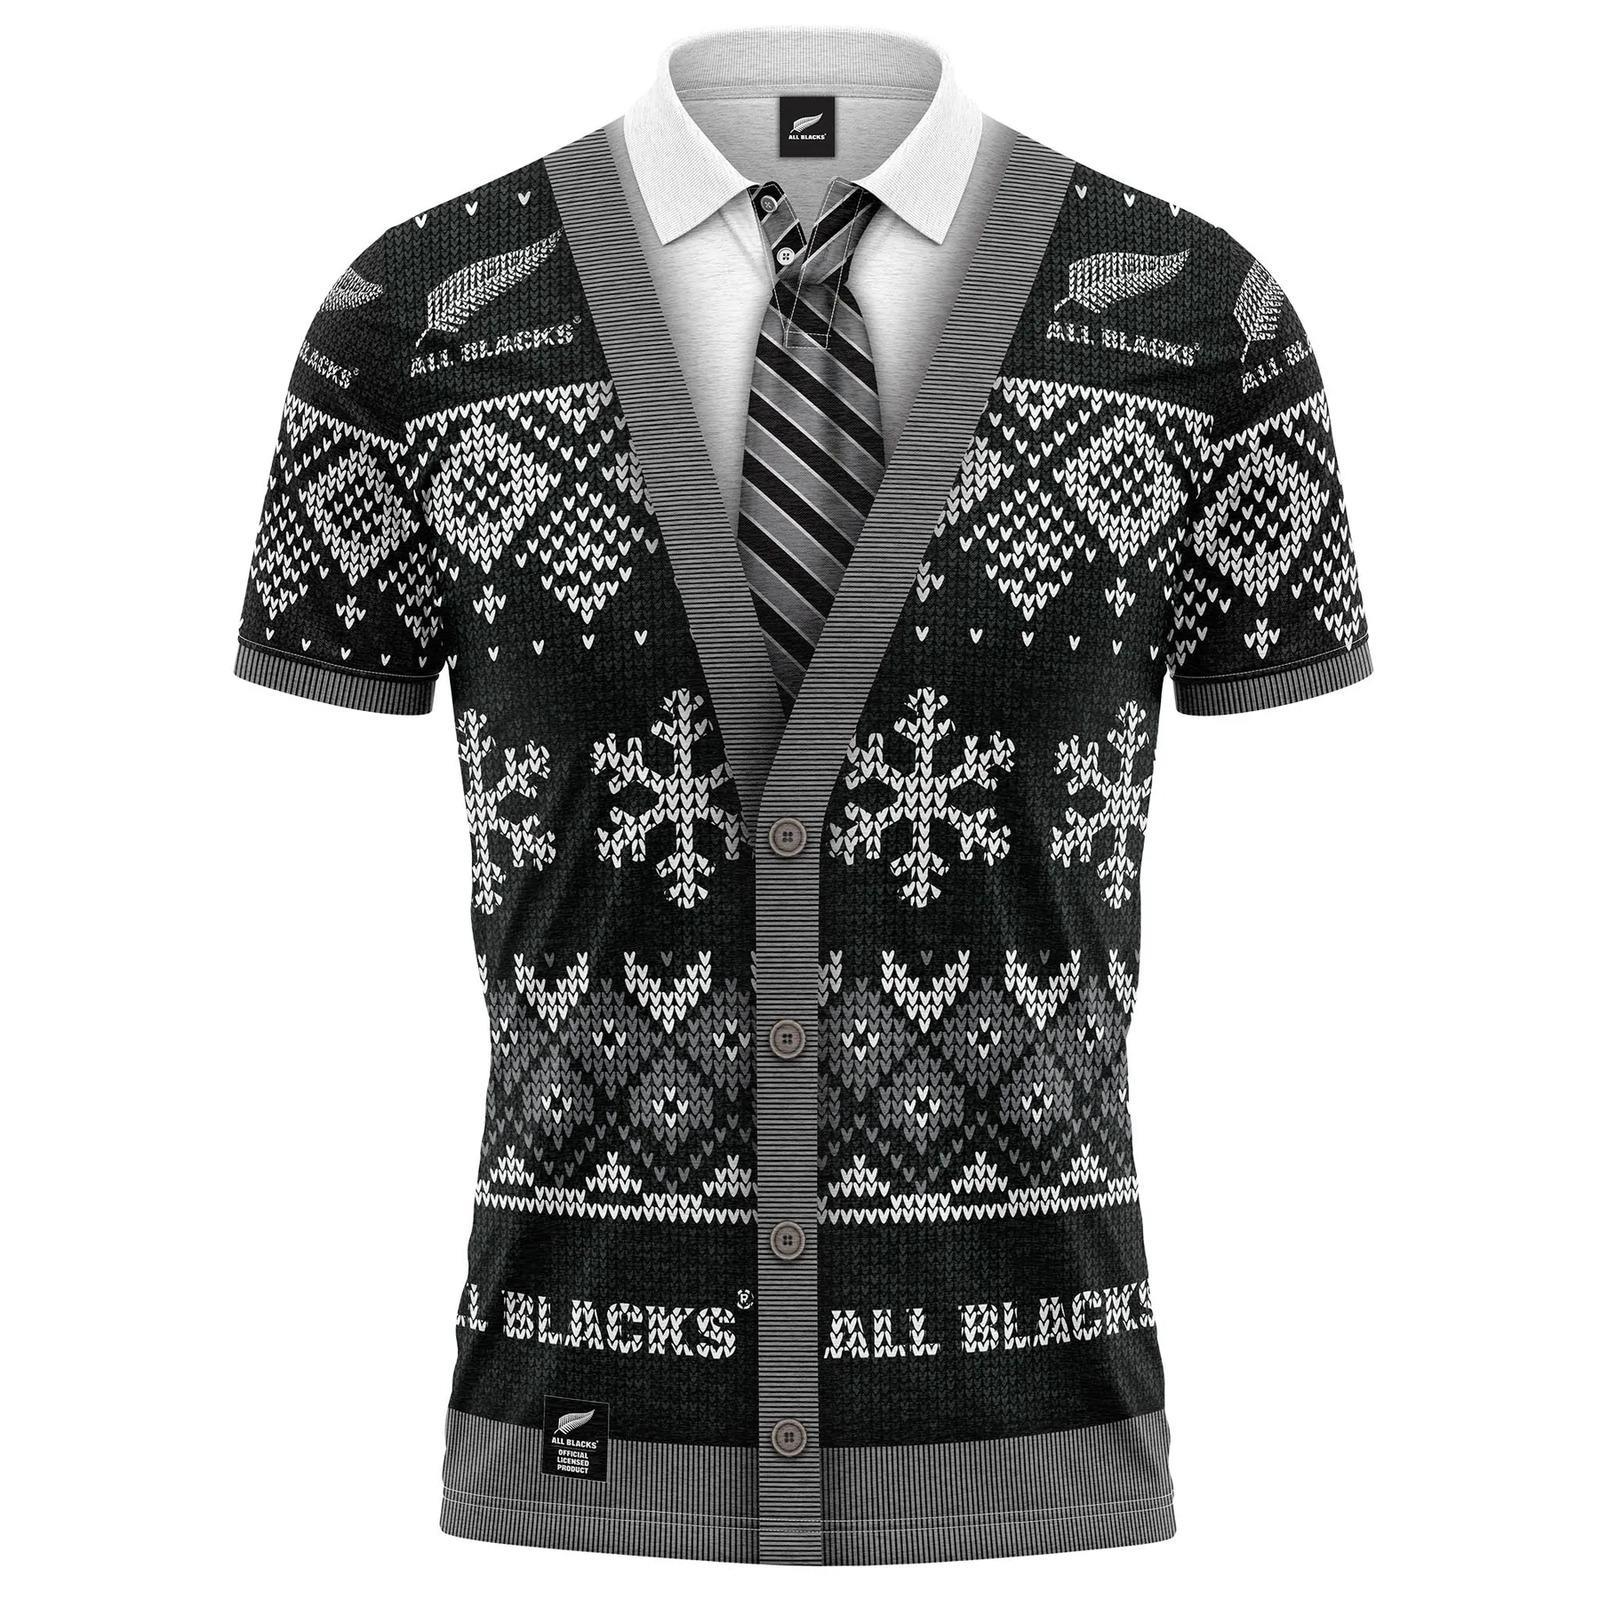 New Zealand All Blacks Super Rugby Xmas Shirt Sizes S-5XL! [Size: Large]